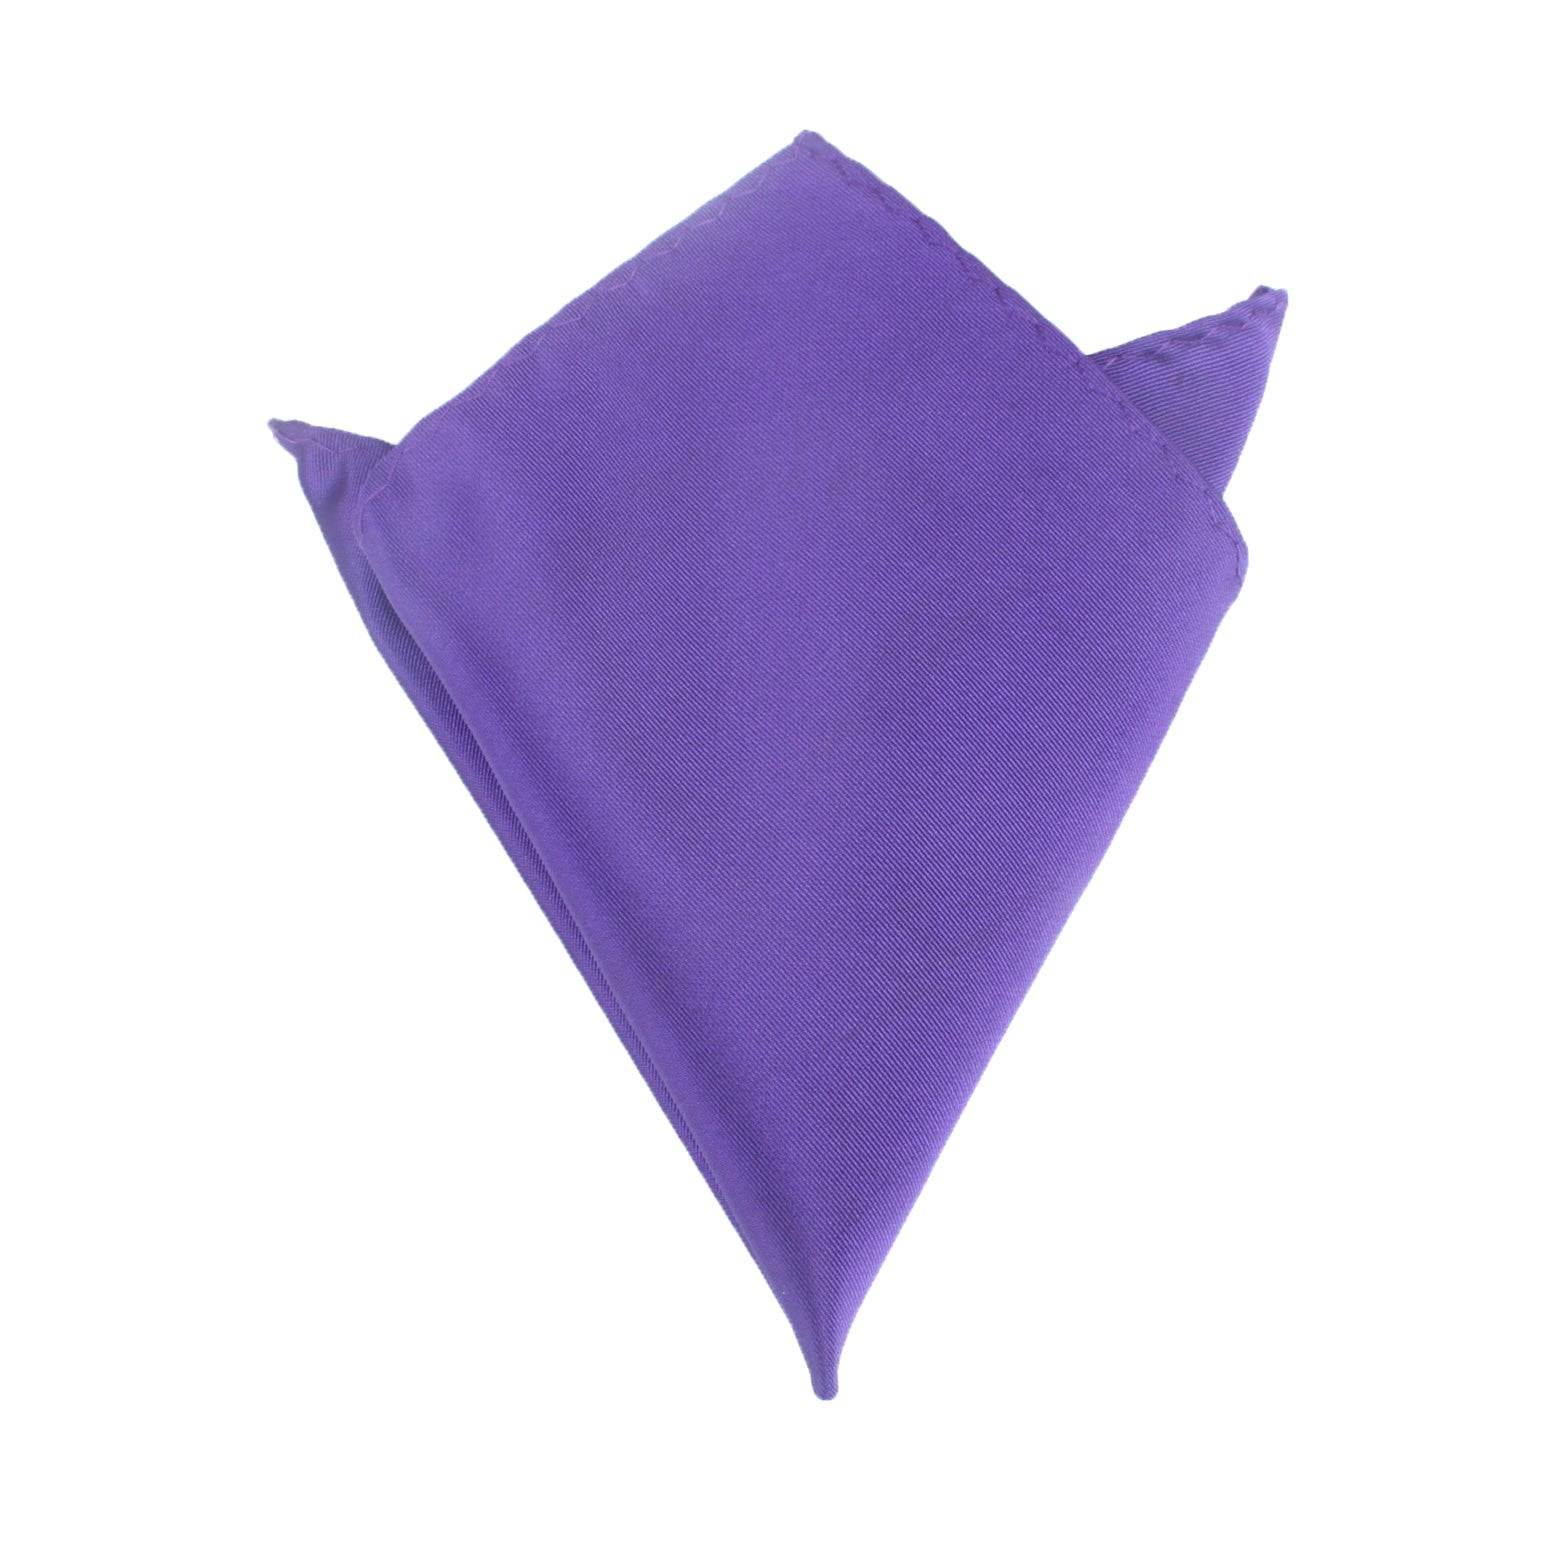 Royal Purple Pocket Square